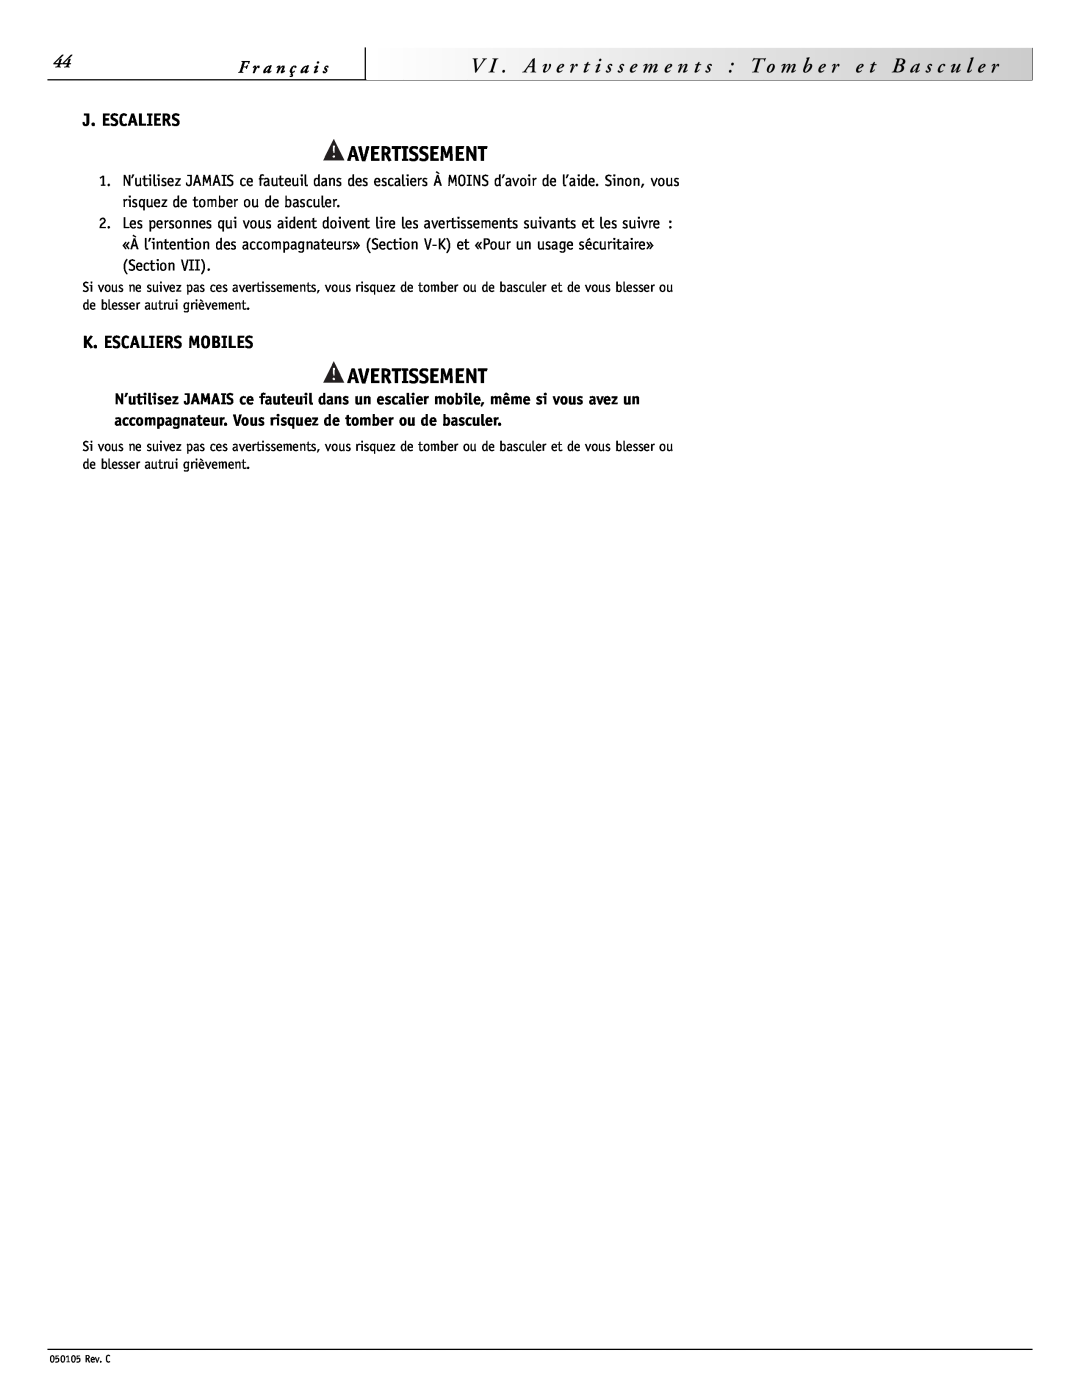 Sunrise Medical GT instruction manual J. Escaliers, K. Escaliers Mobiles, A v e, u l e r, Avertissement 